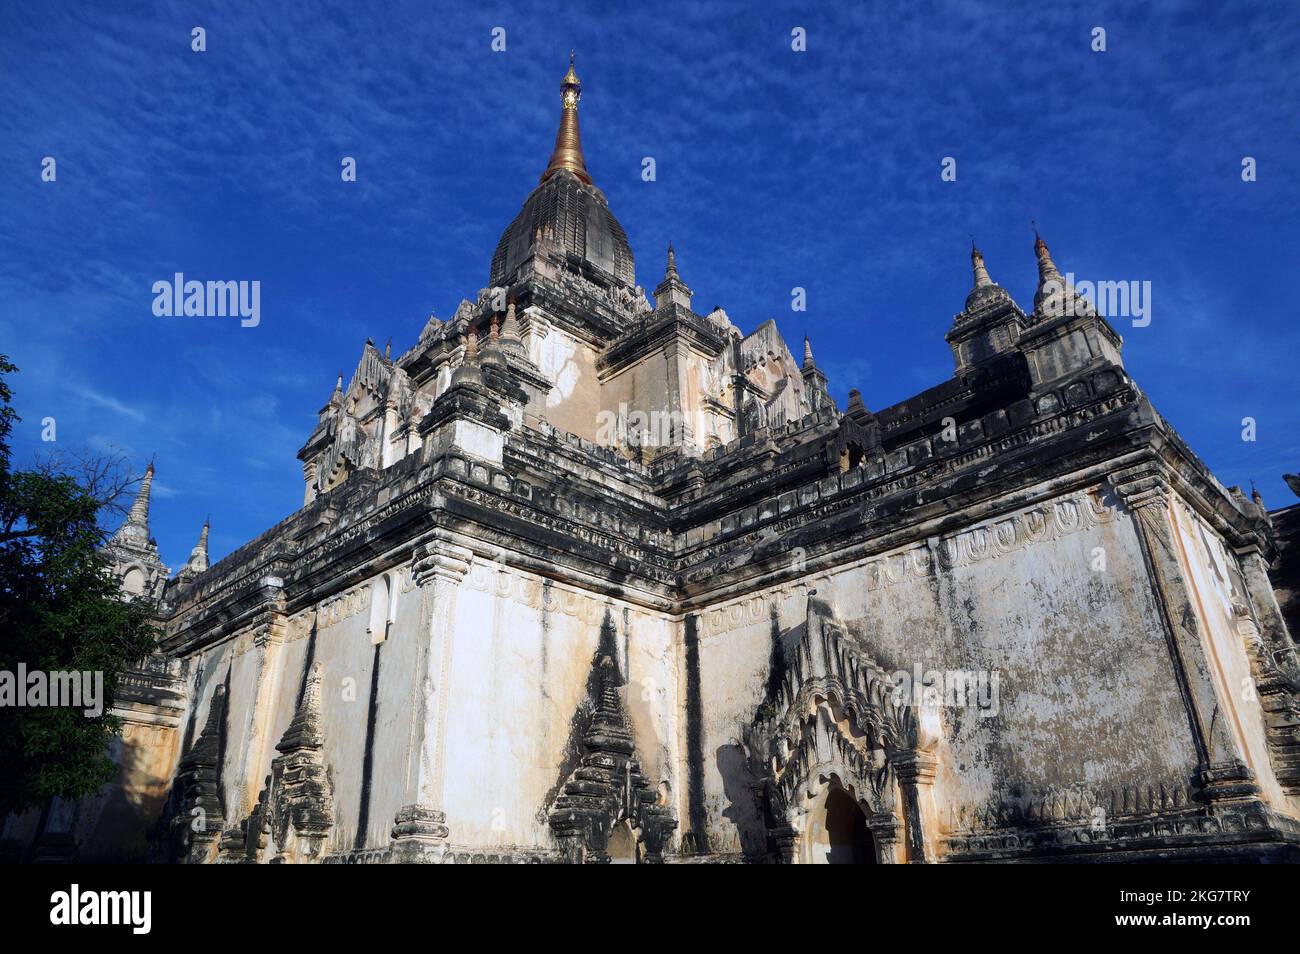 Gawdawpalin temple in the UNESCO World Heritage site of Bagan, Myanmar Stock Photo